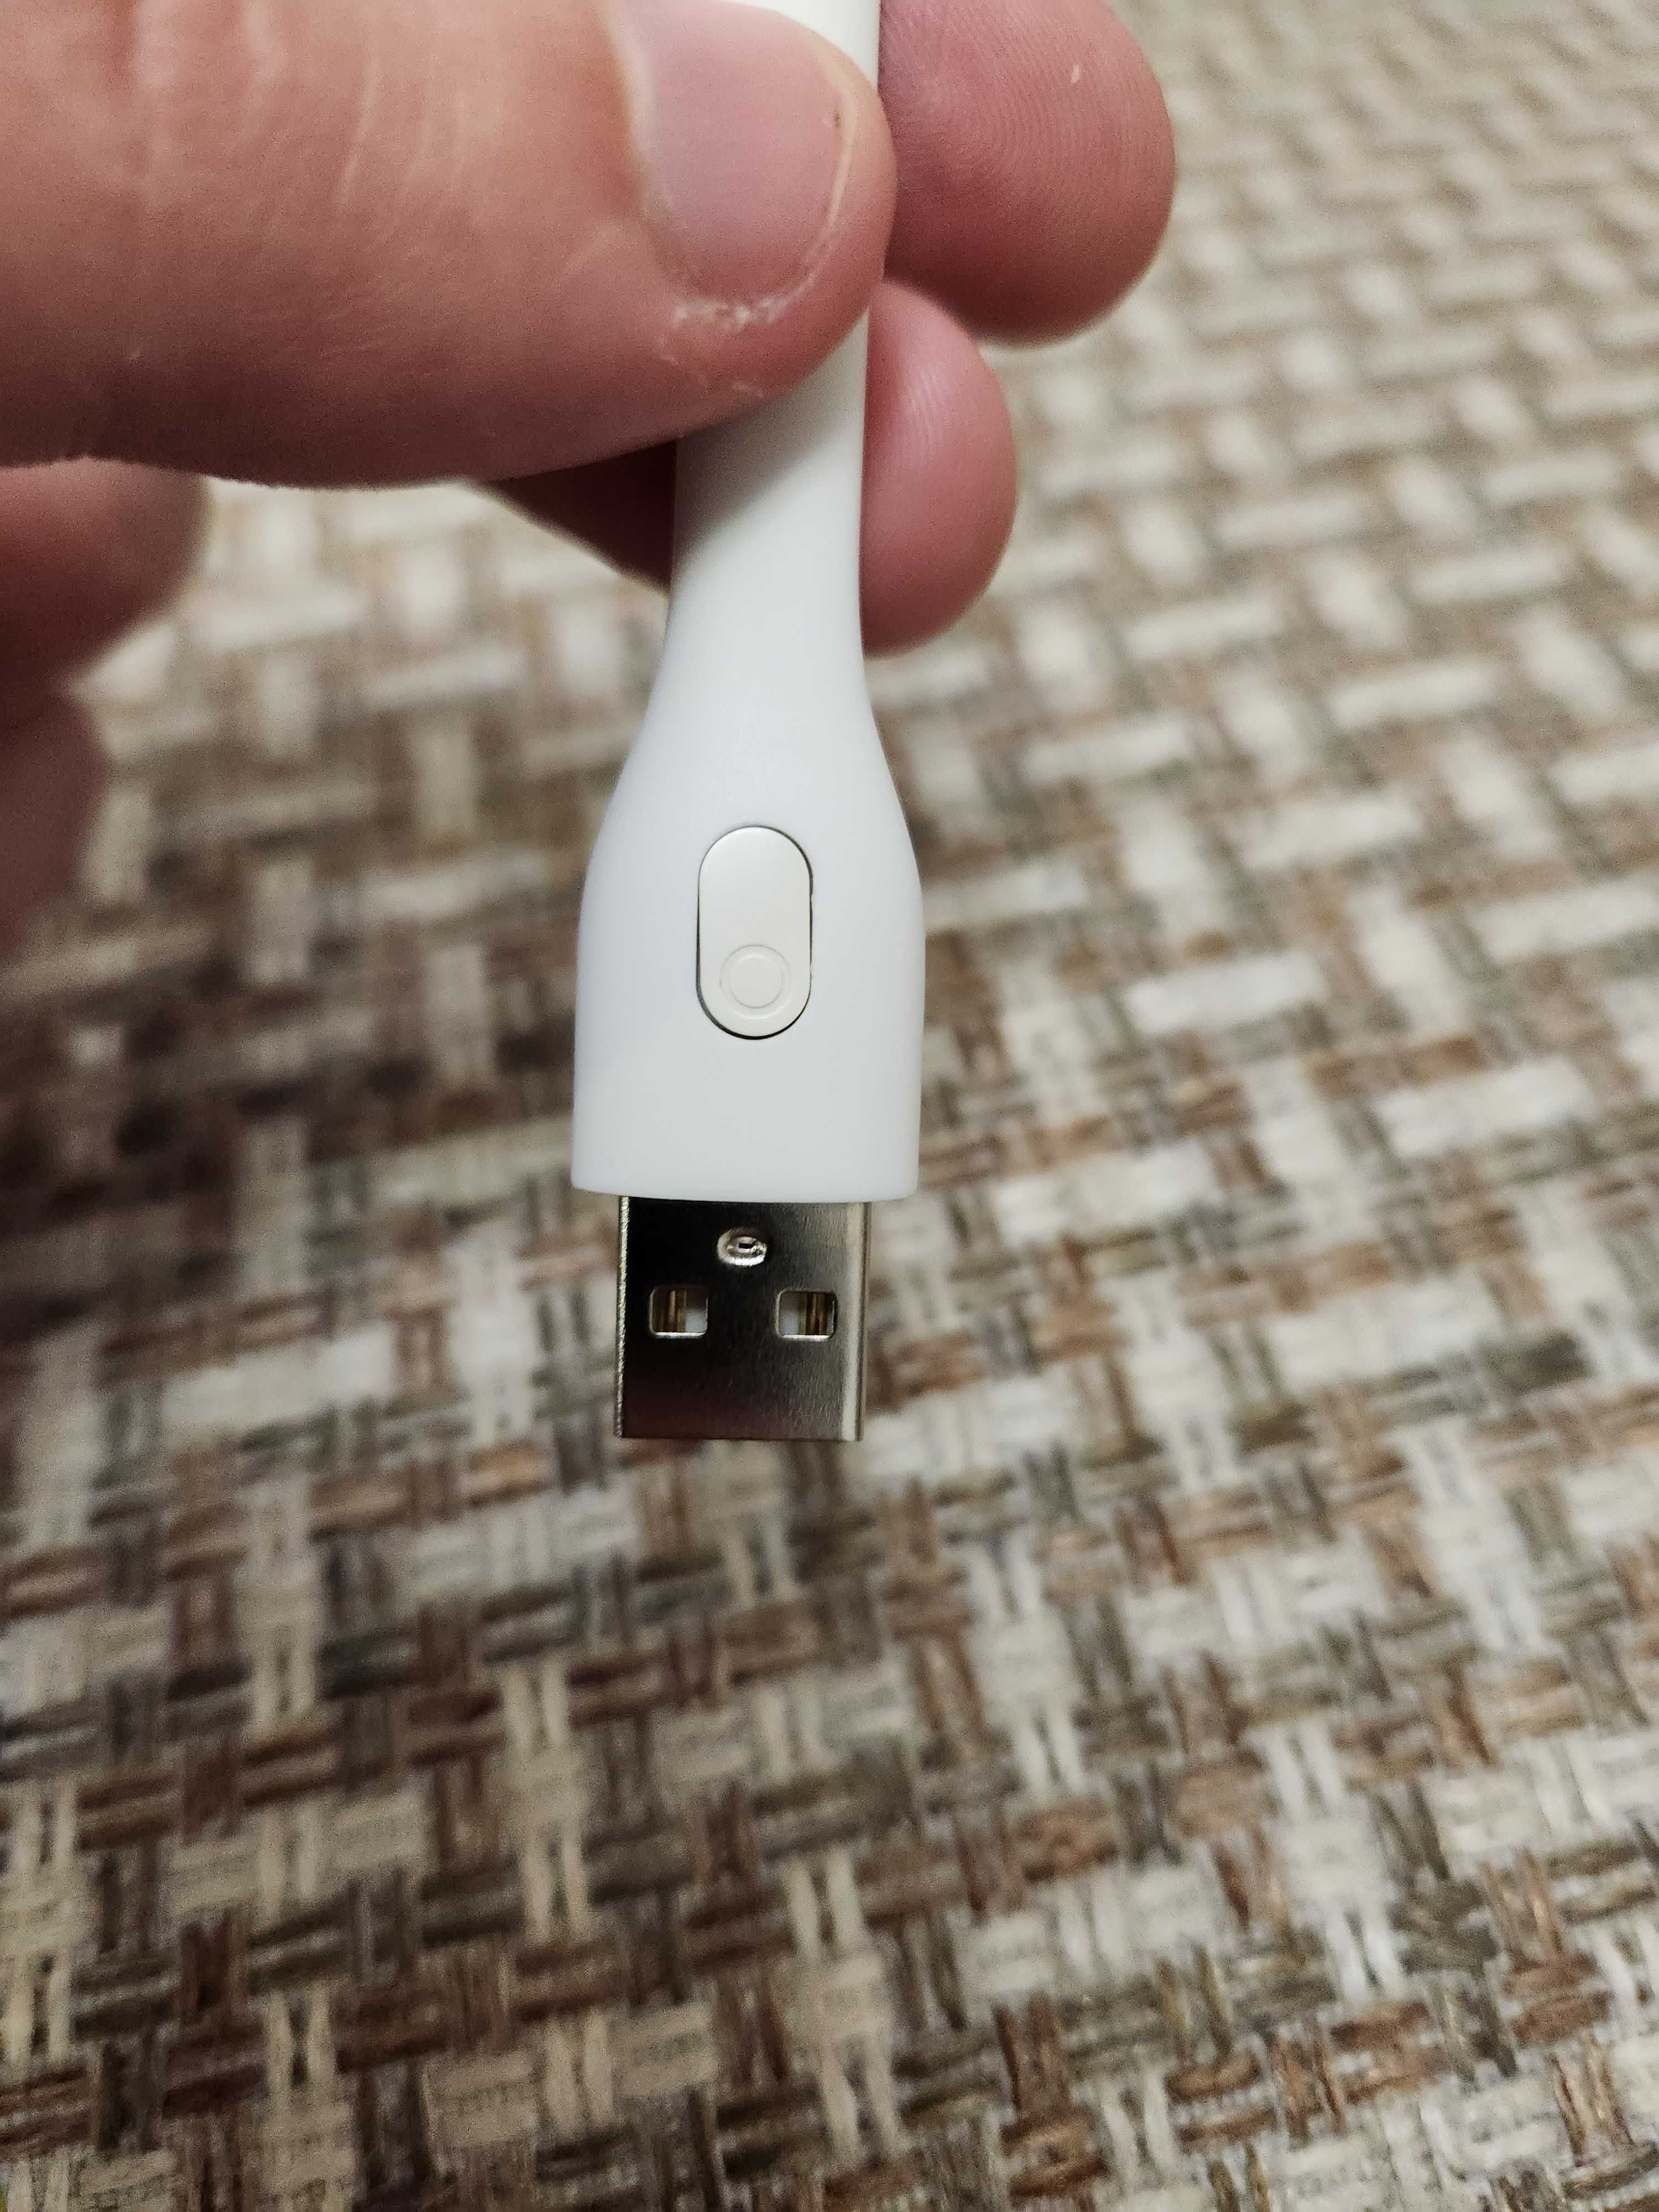 USB лампа фонарик 5 режимів Xiaomi ZMI Portable LED 2 AL003